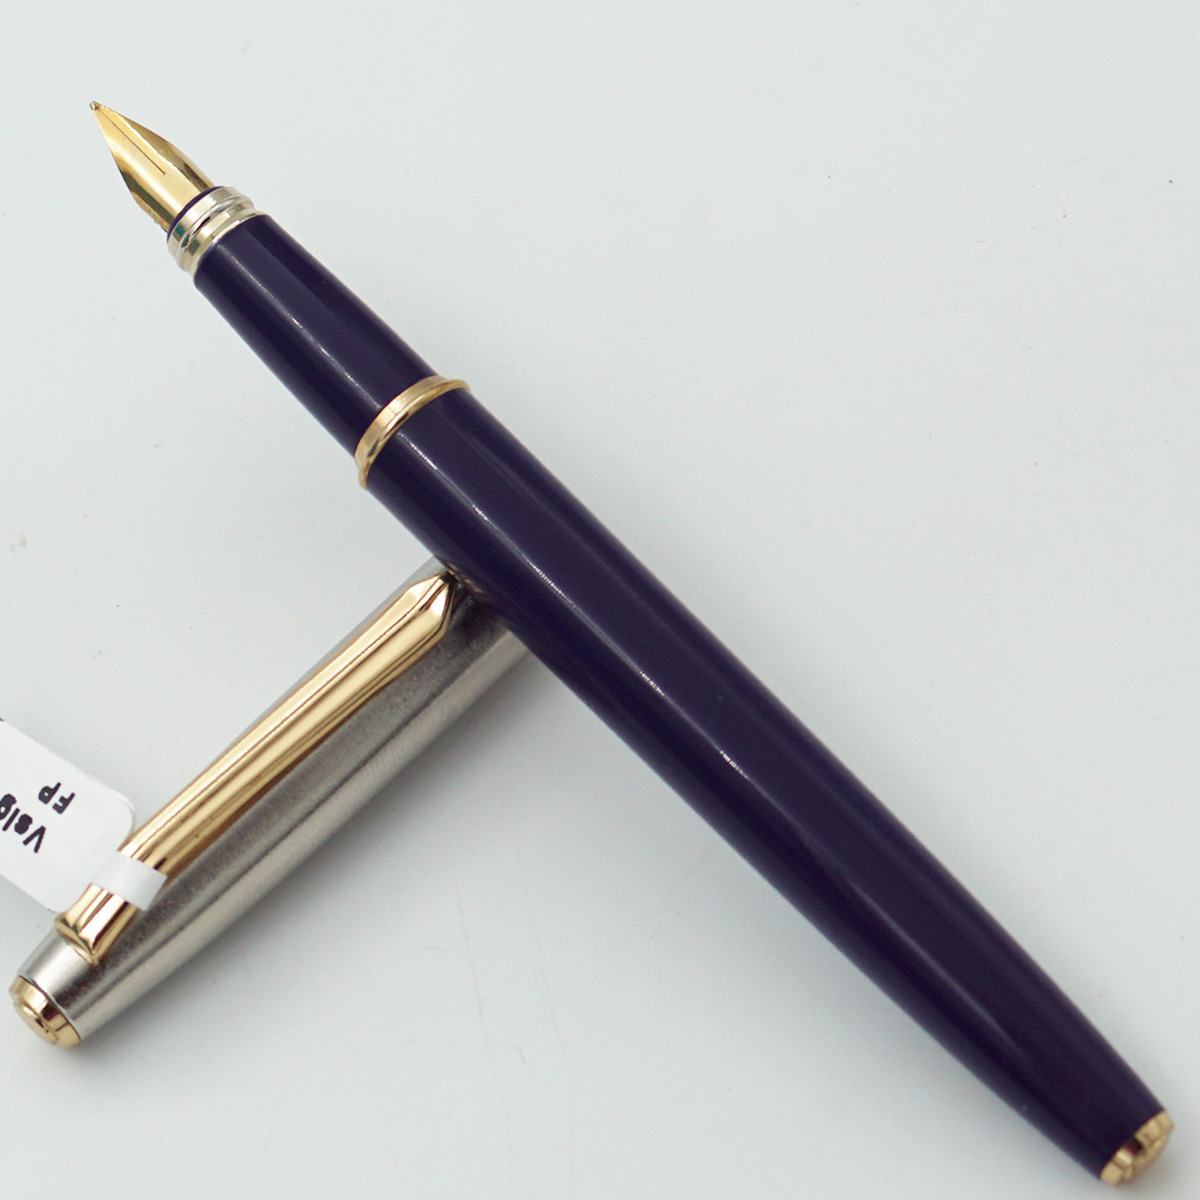 Vsign Stride Blue Color Body With Golden Color Clip Medium Nib Eye Dropper Model Fountain Pen(3 in 1) SKU 24475